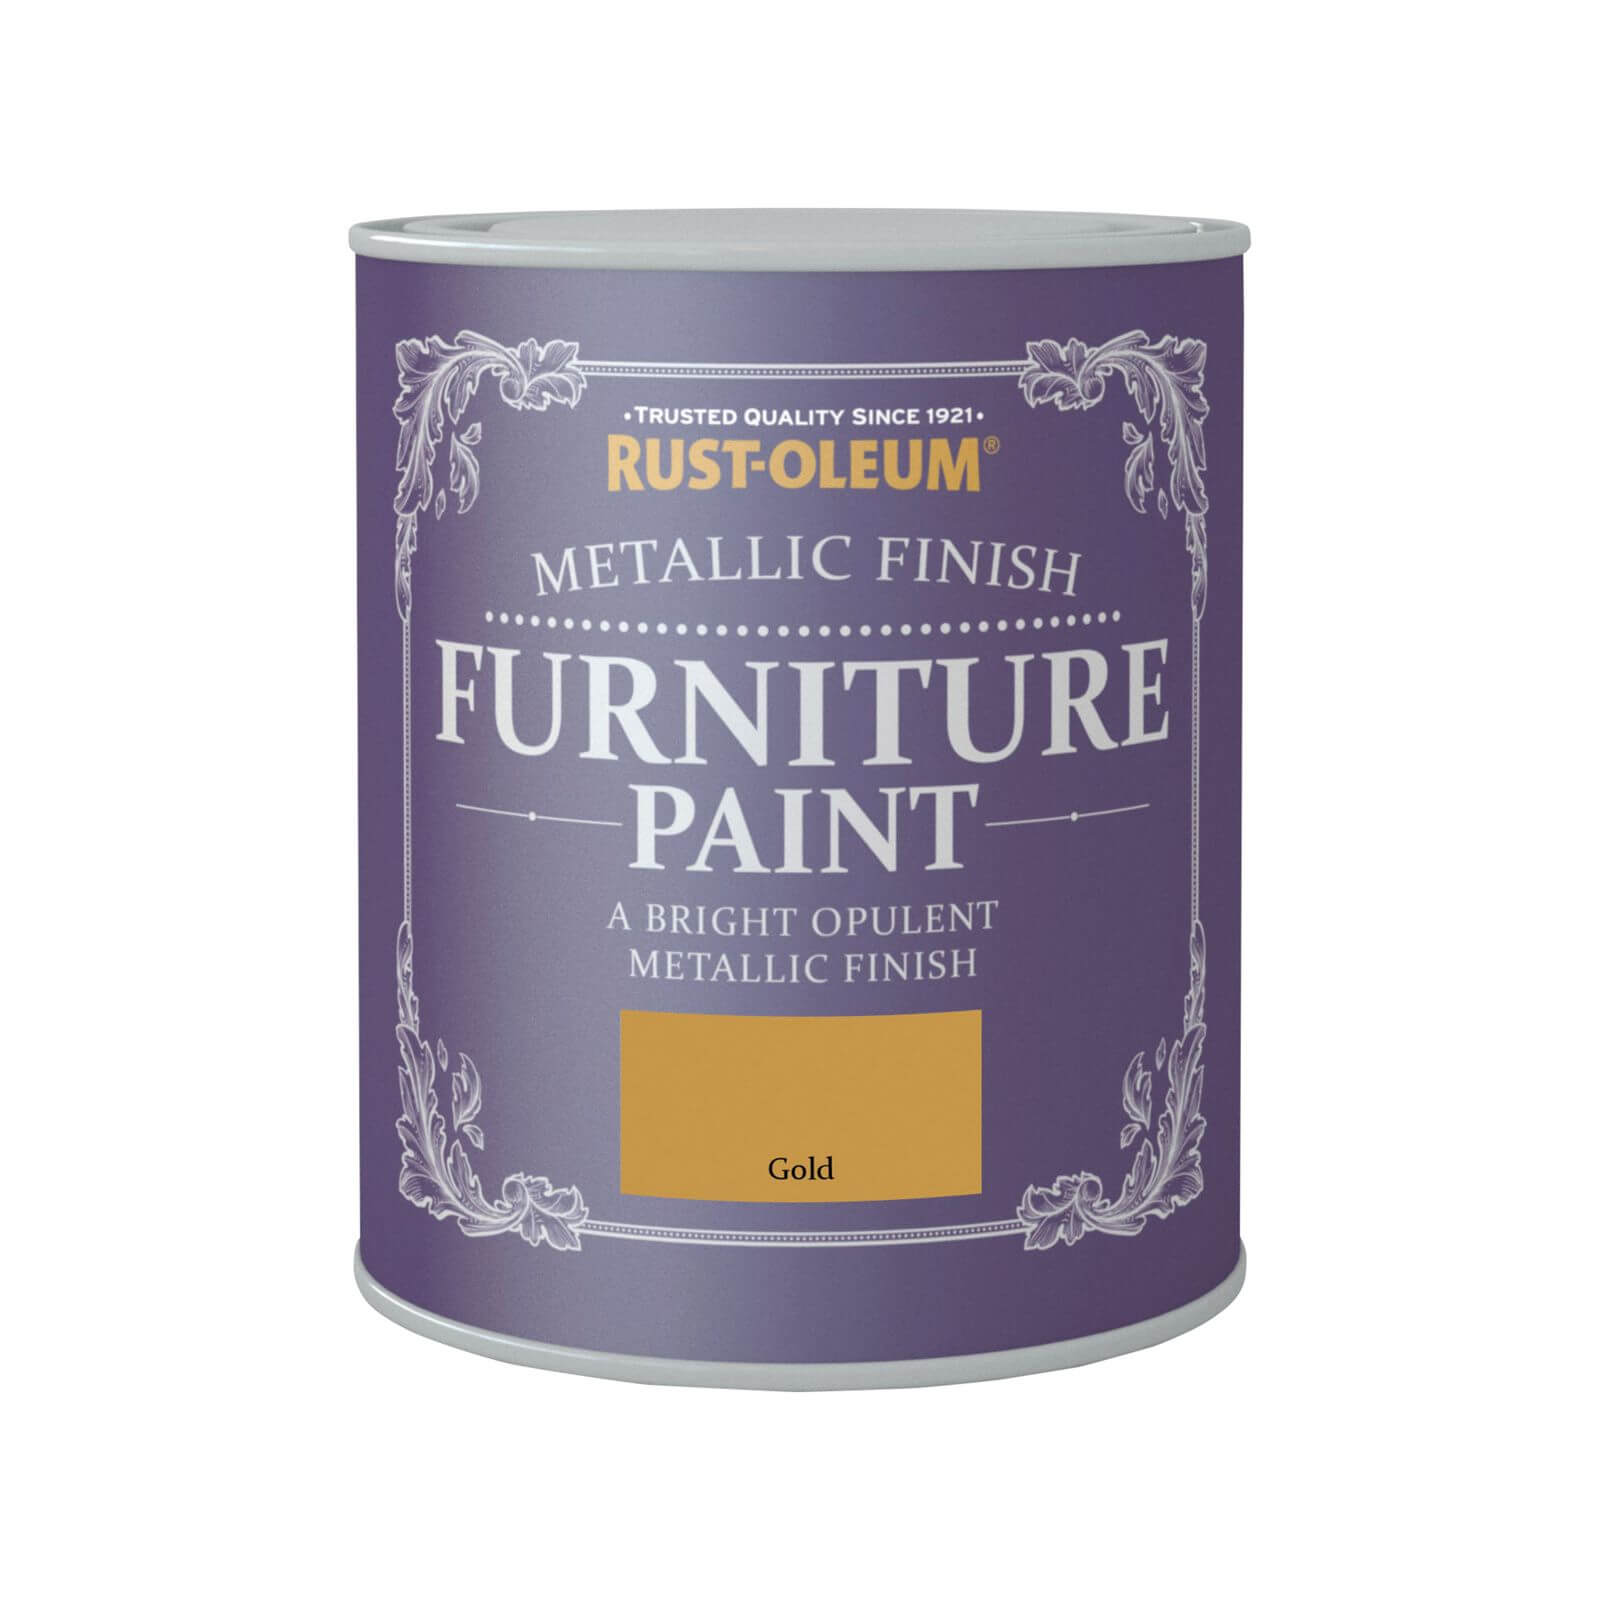 Photo of Rust-oleum Metallic Furniture Paint - Gold - 750ml